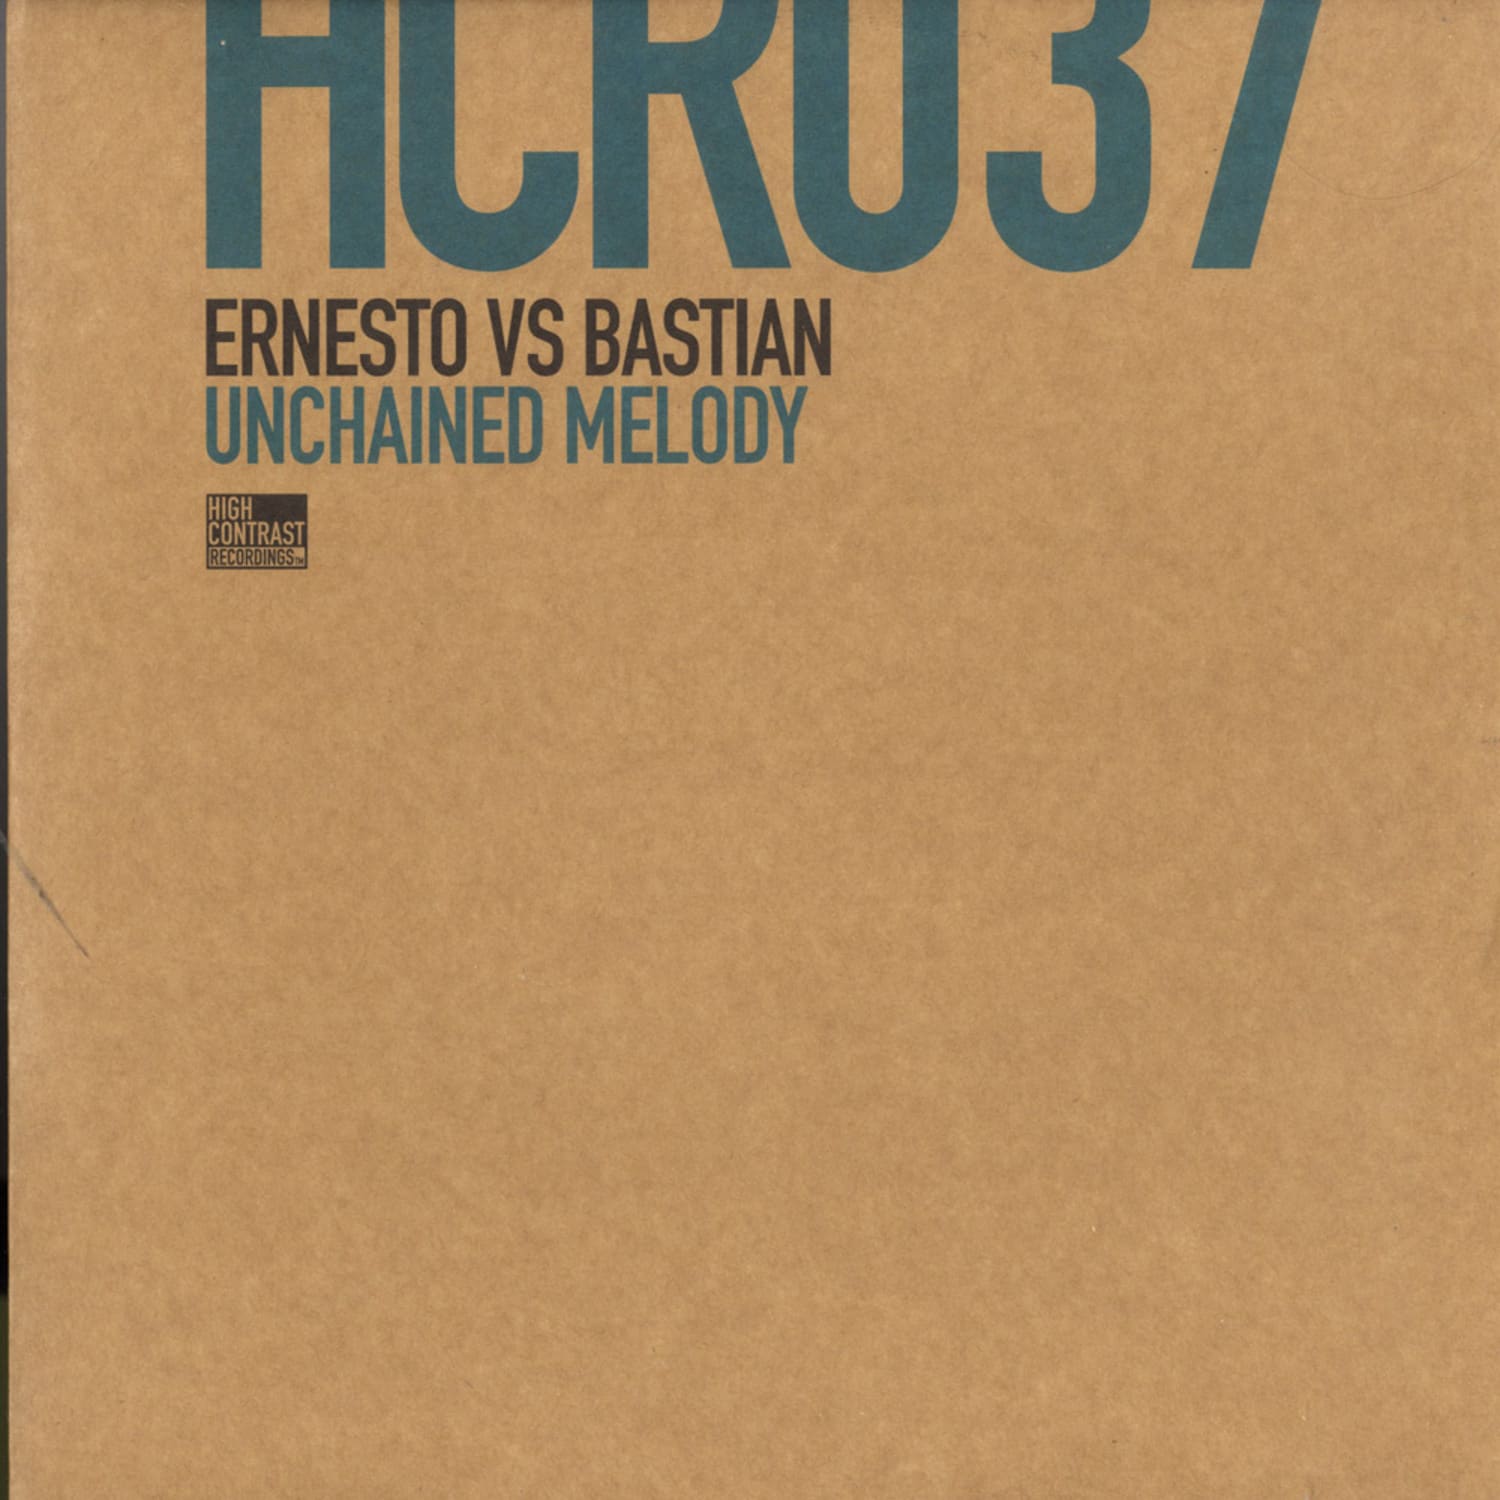 Ernesto vs Bastian - UNCHAINED MELODY